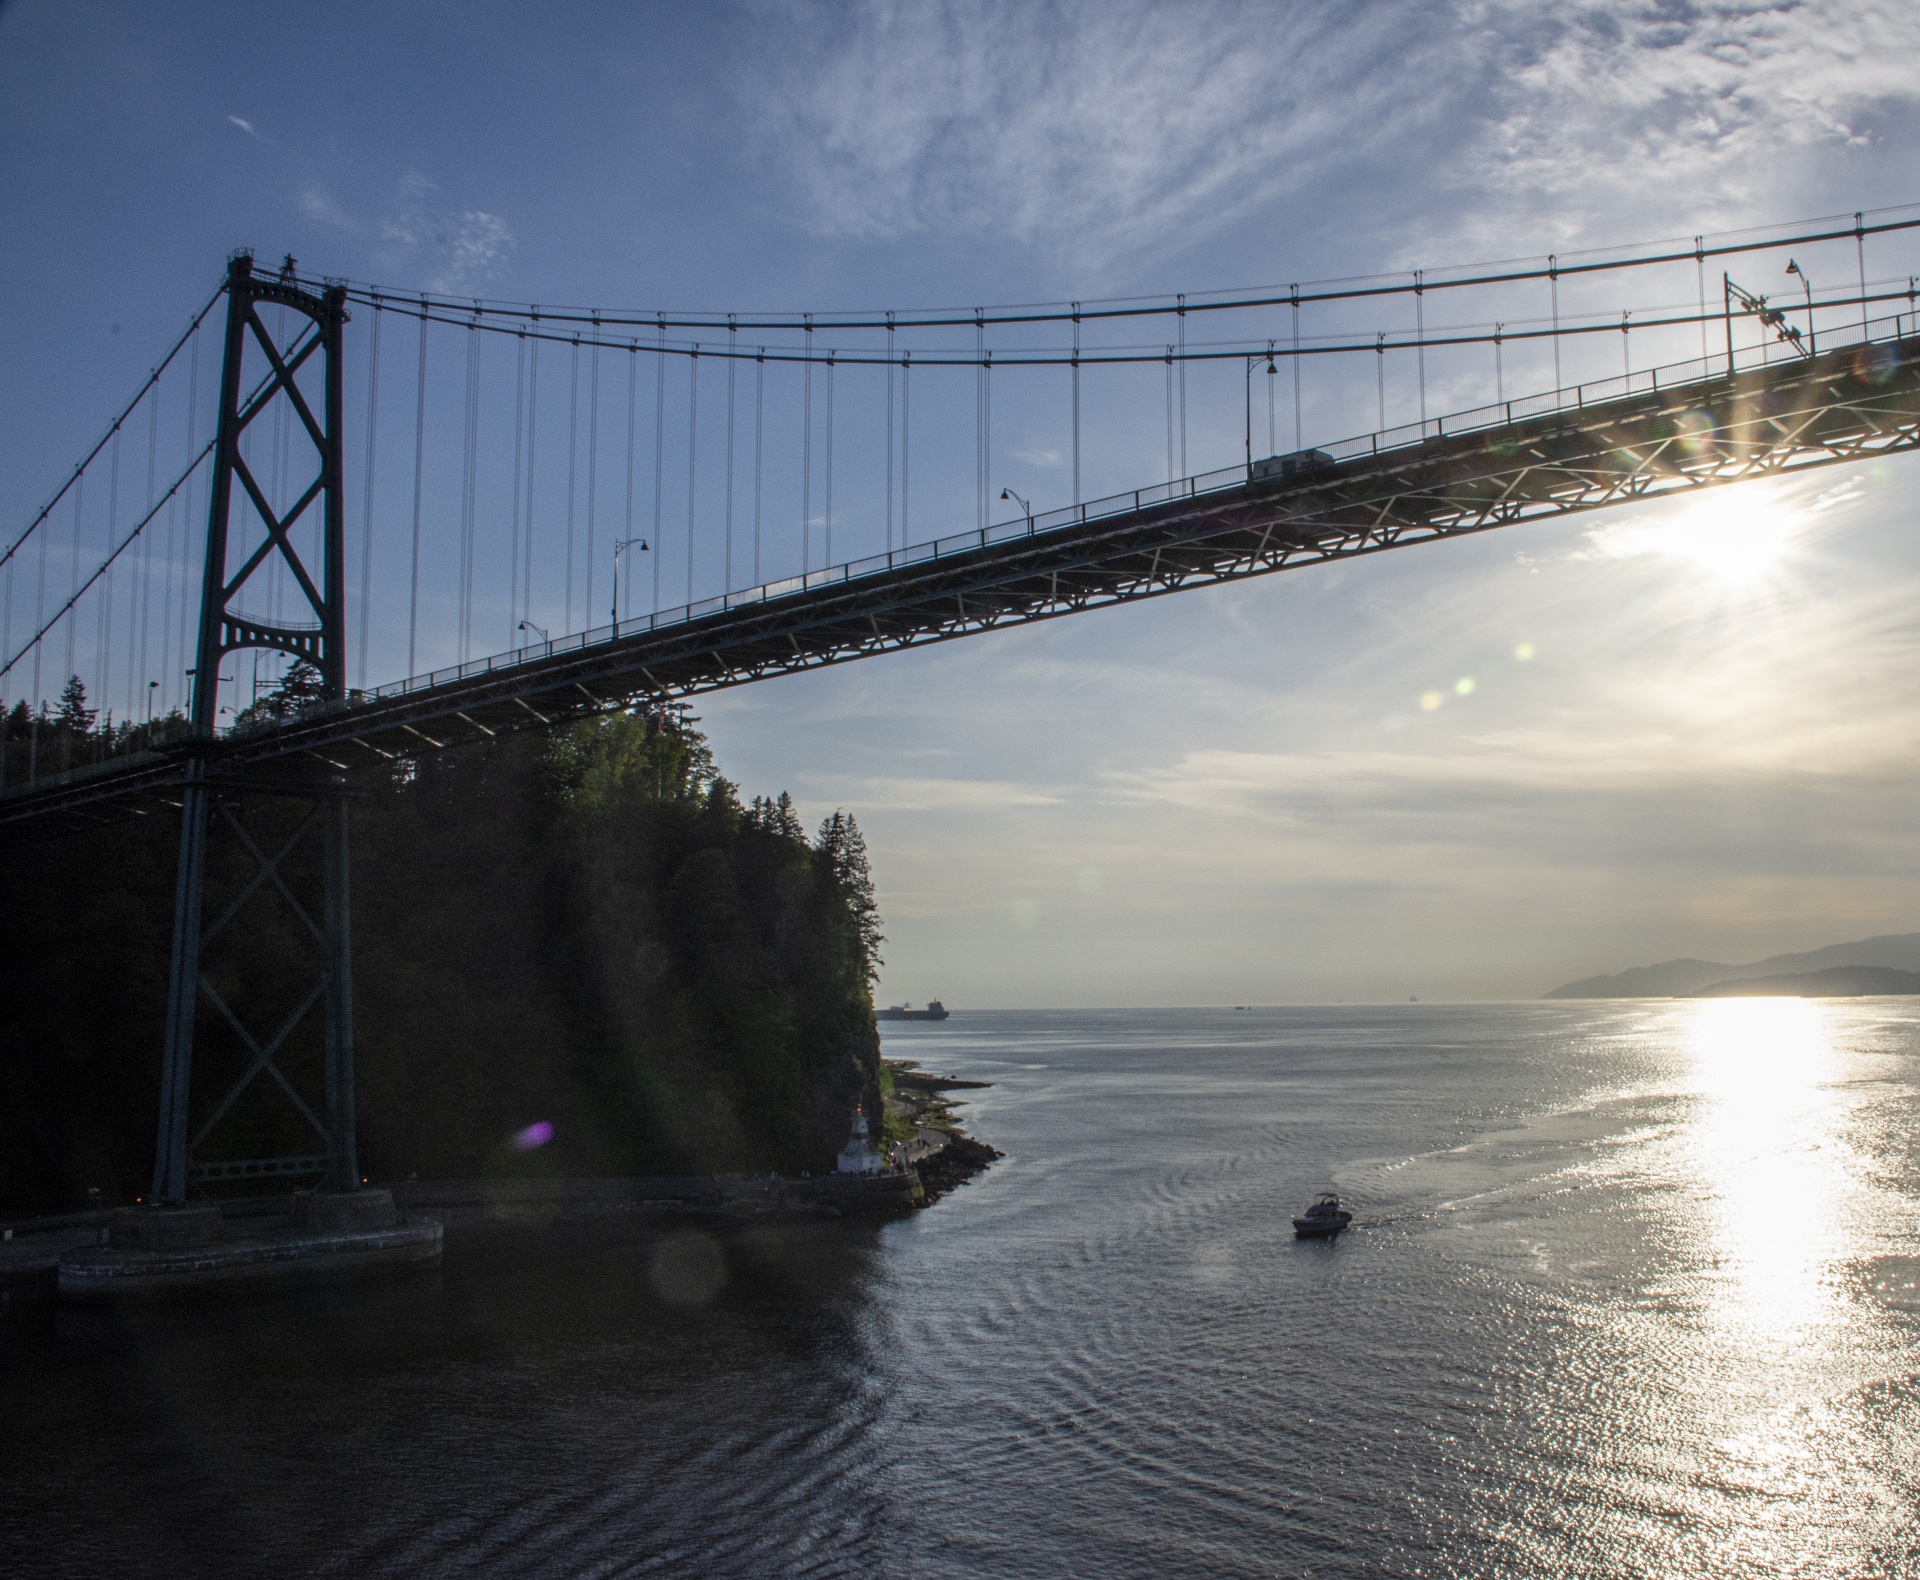 Vancouver's bridge at sunset